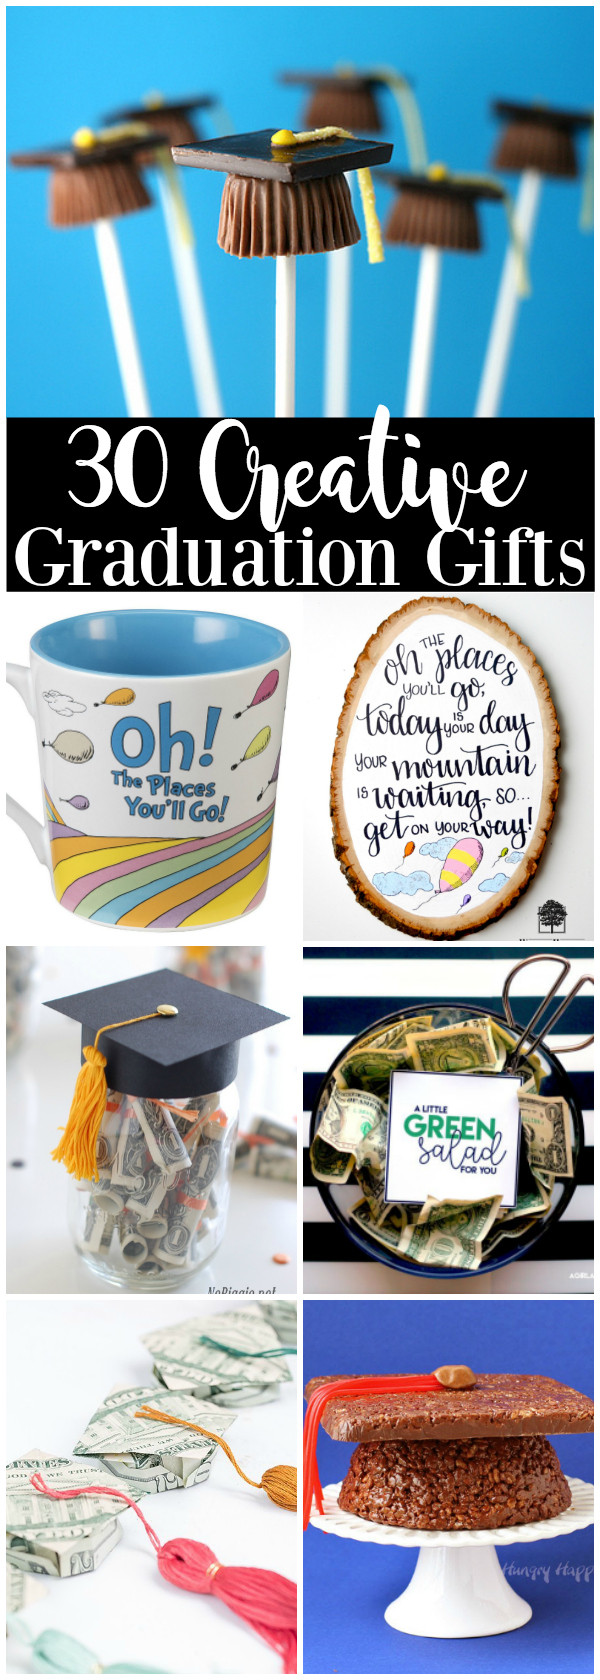 High Graduation Gift Ideas
 30 Creative Graduation Gift Ideas